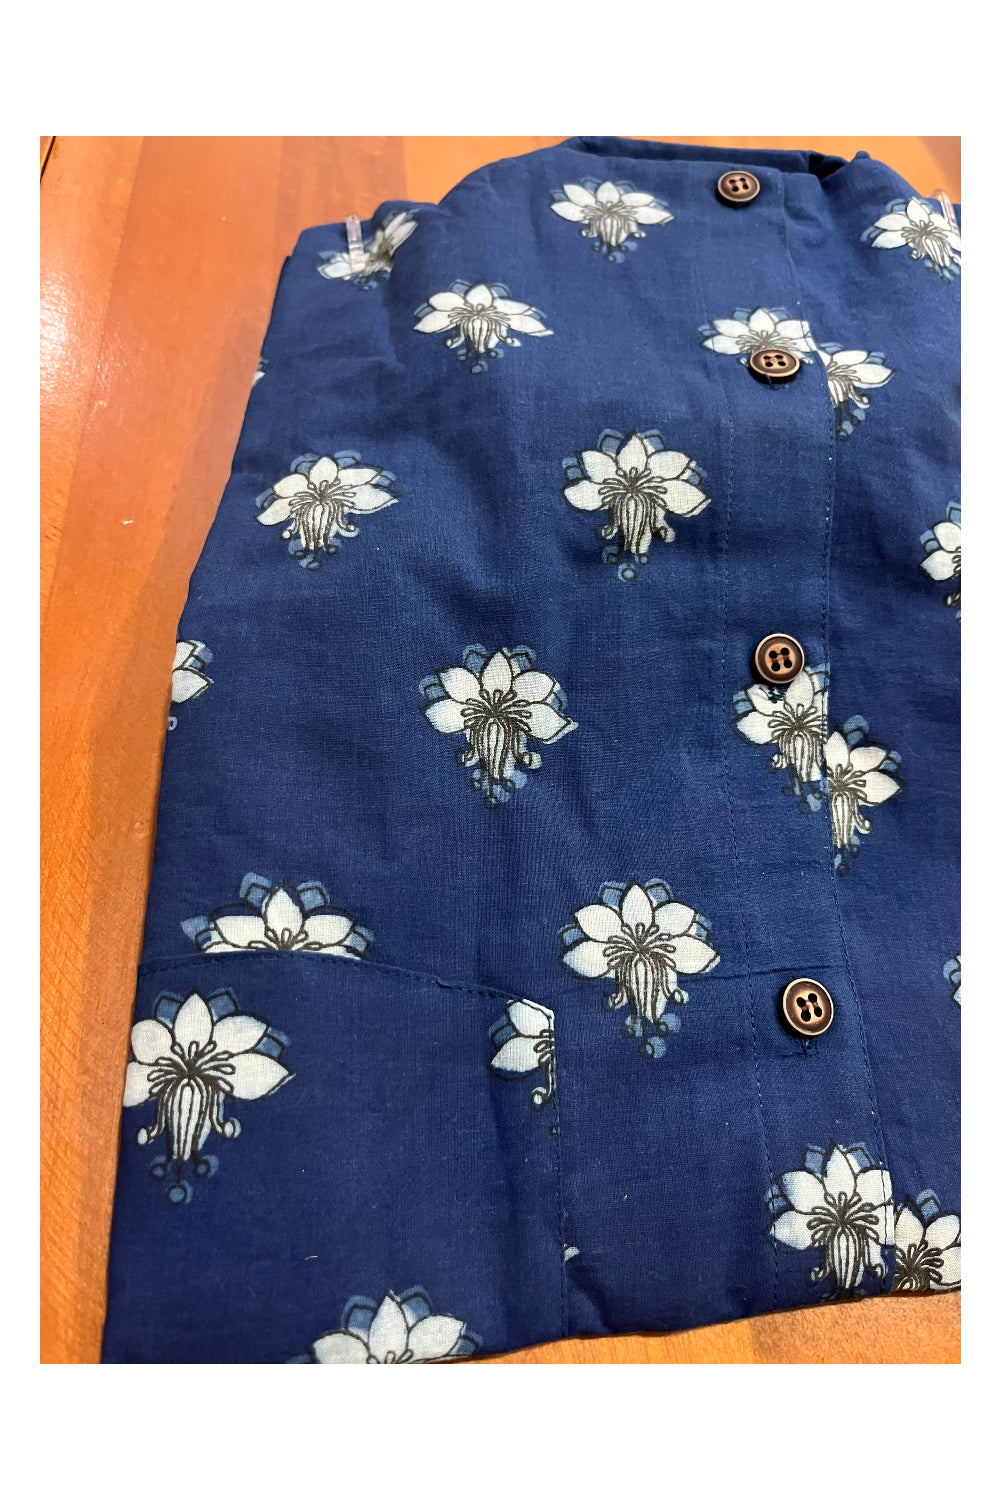 Southloom Jaipur Cotton Floral Hand Block Printed Blue Shirt (Half Sleeves)